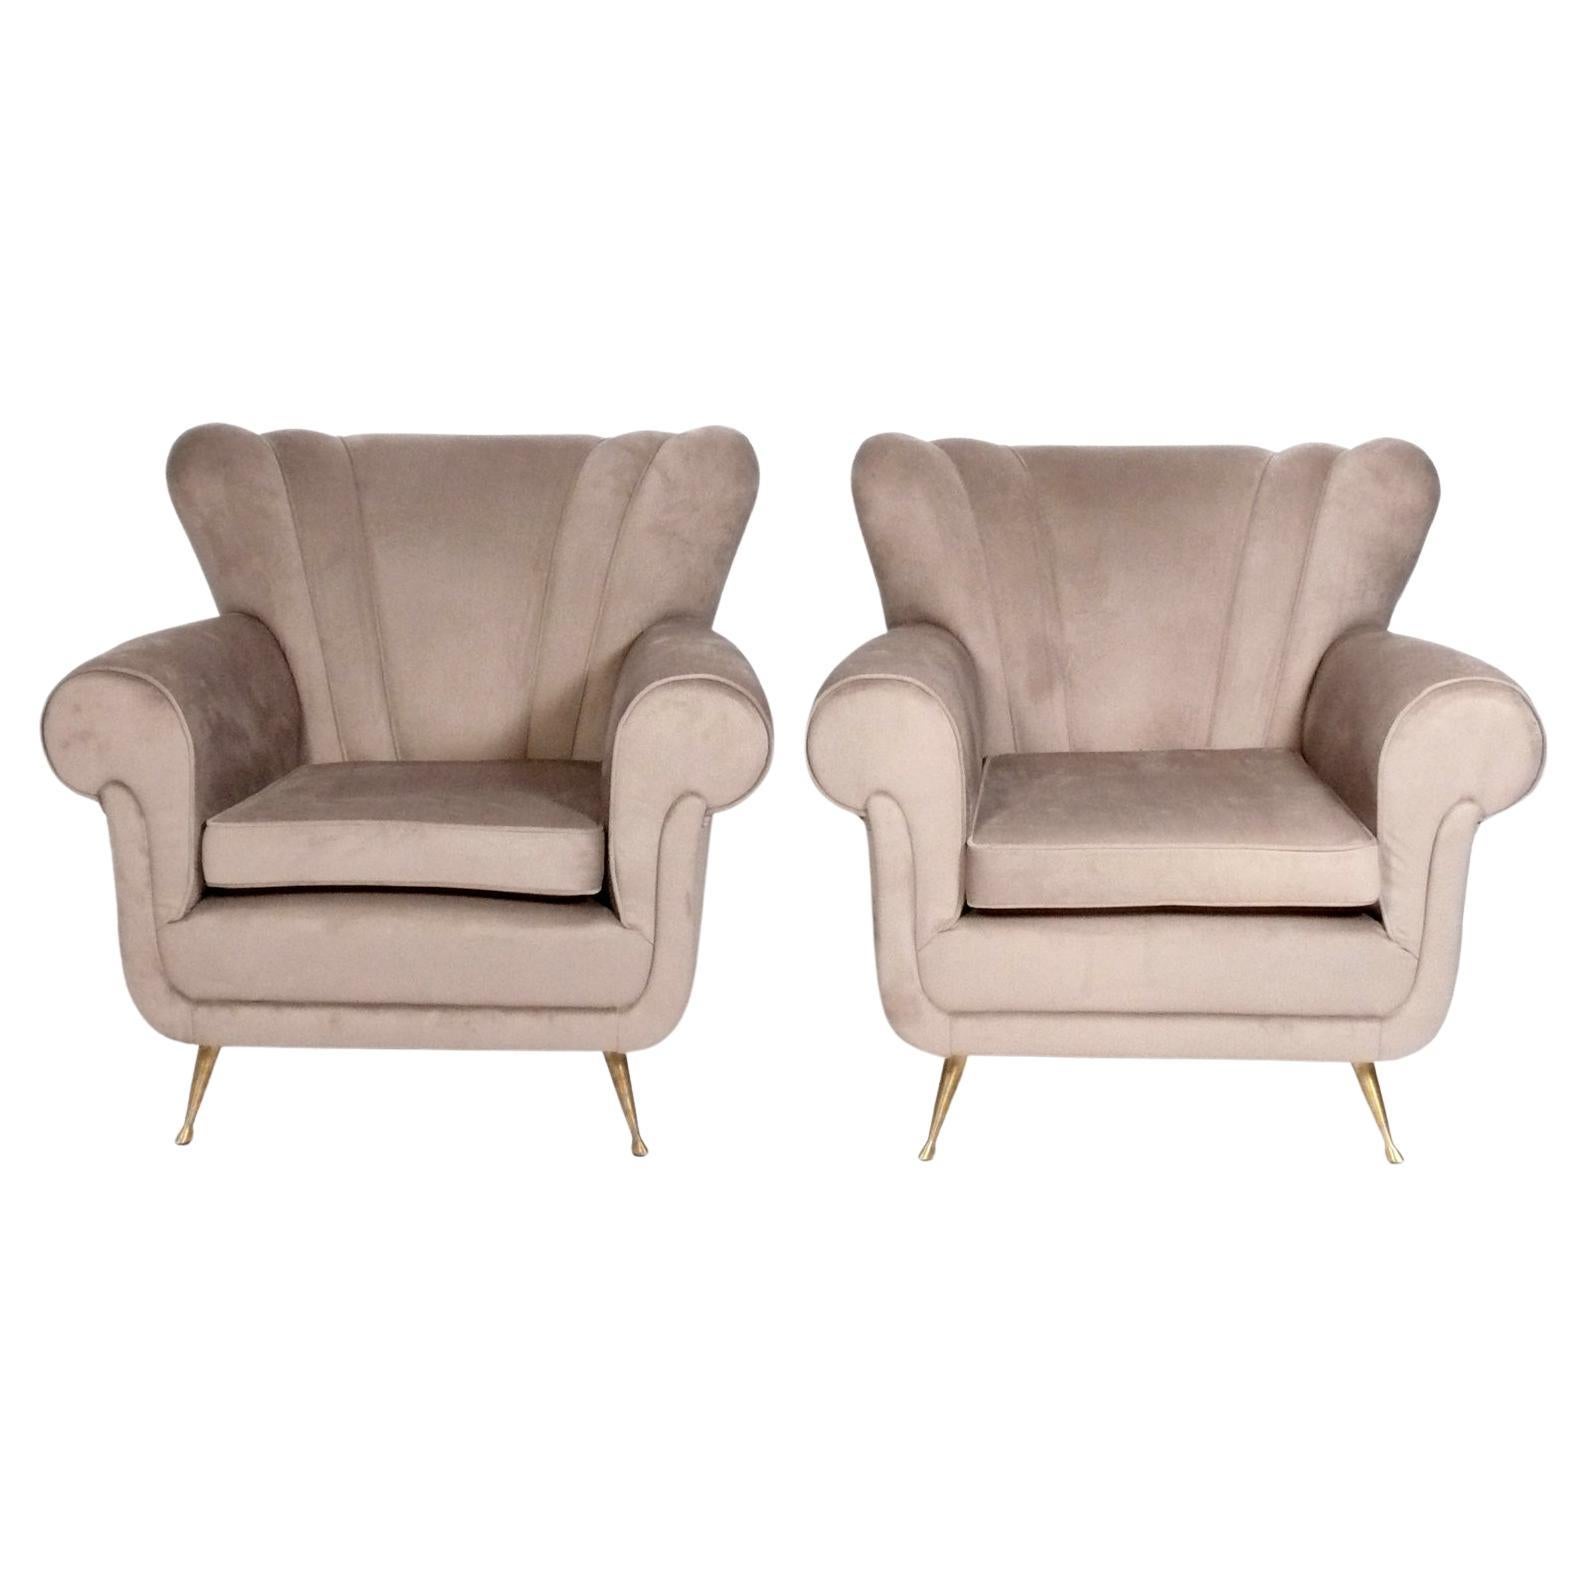 Pair of Italian Lounge Chairs Mid Century Style 